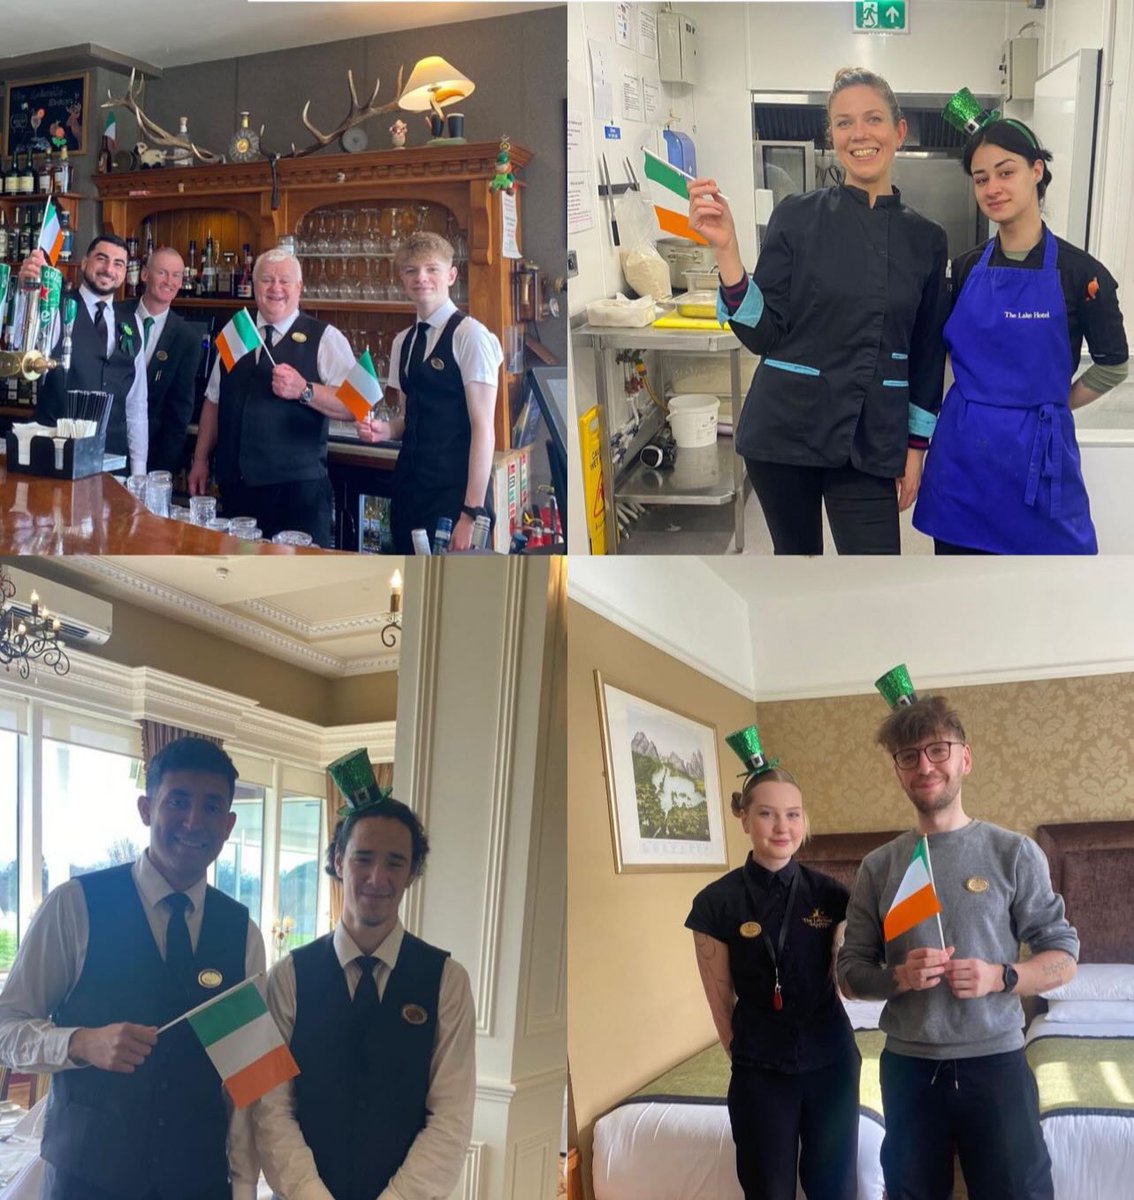 Happy Saint Patrick’s Day from all the team at The Lake Hotel, Killarney 🍀🍀💚💚🇮🇪🇮🇪 #teamlake #saintpatricksday #láféilepádraig #lakehotelkillarney #thelakehotel #lovekillarney #discoverireland